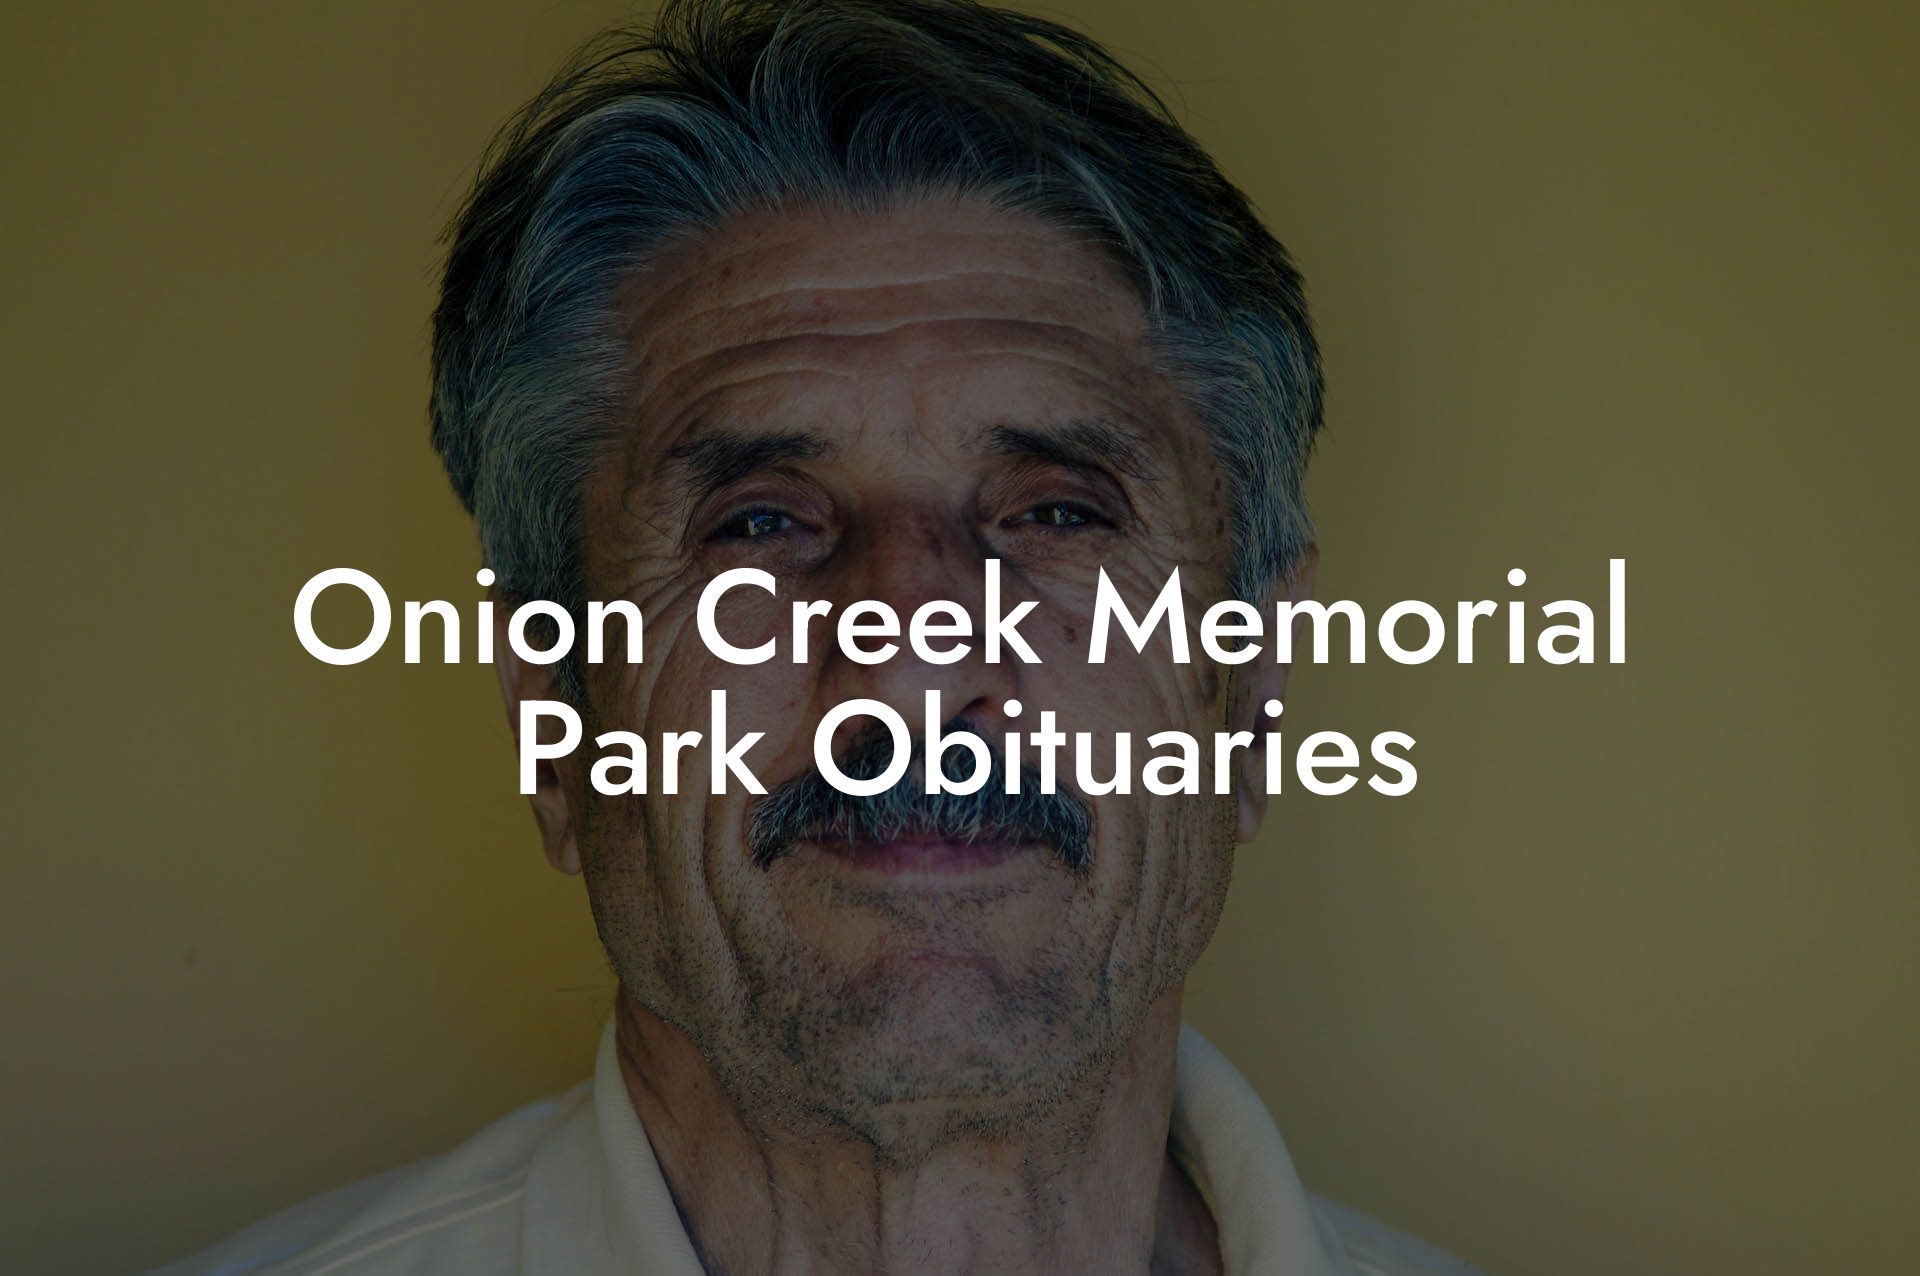 Onion Creek Memorial Park Obituaries